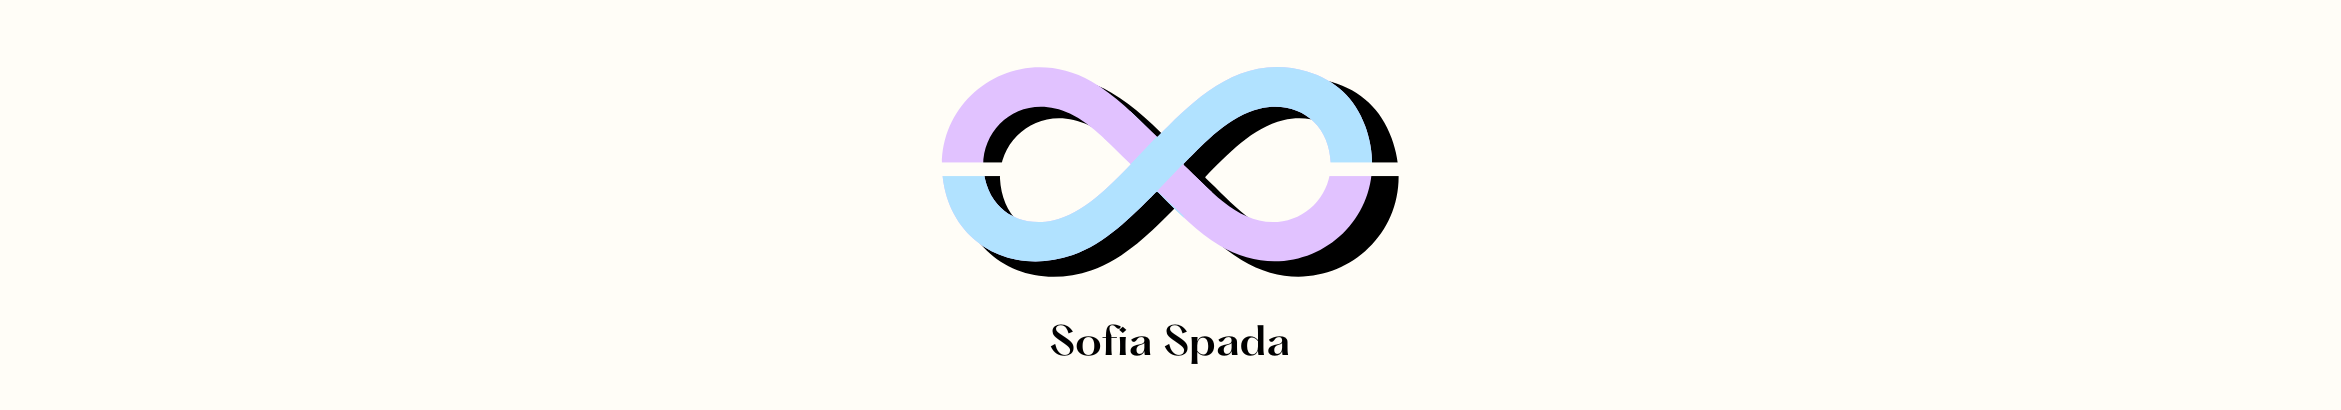 Banner de perfil de Sofia Spada da Silva